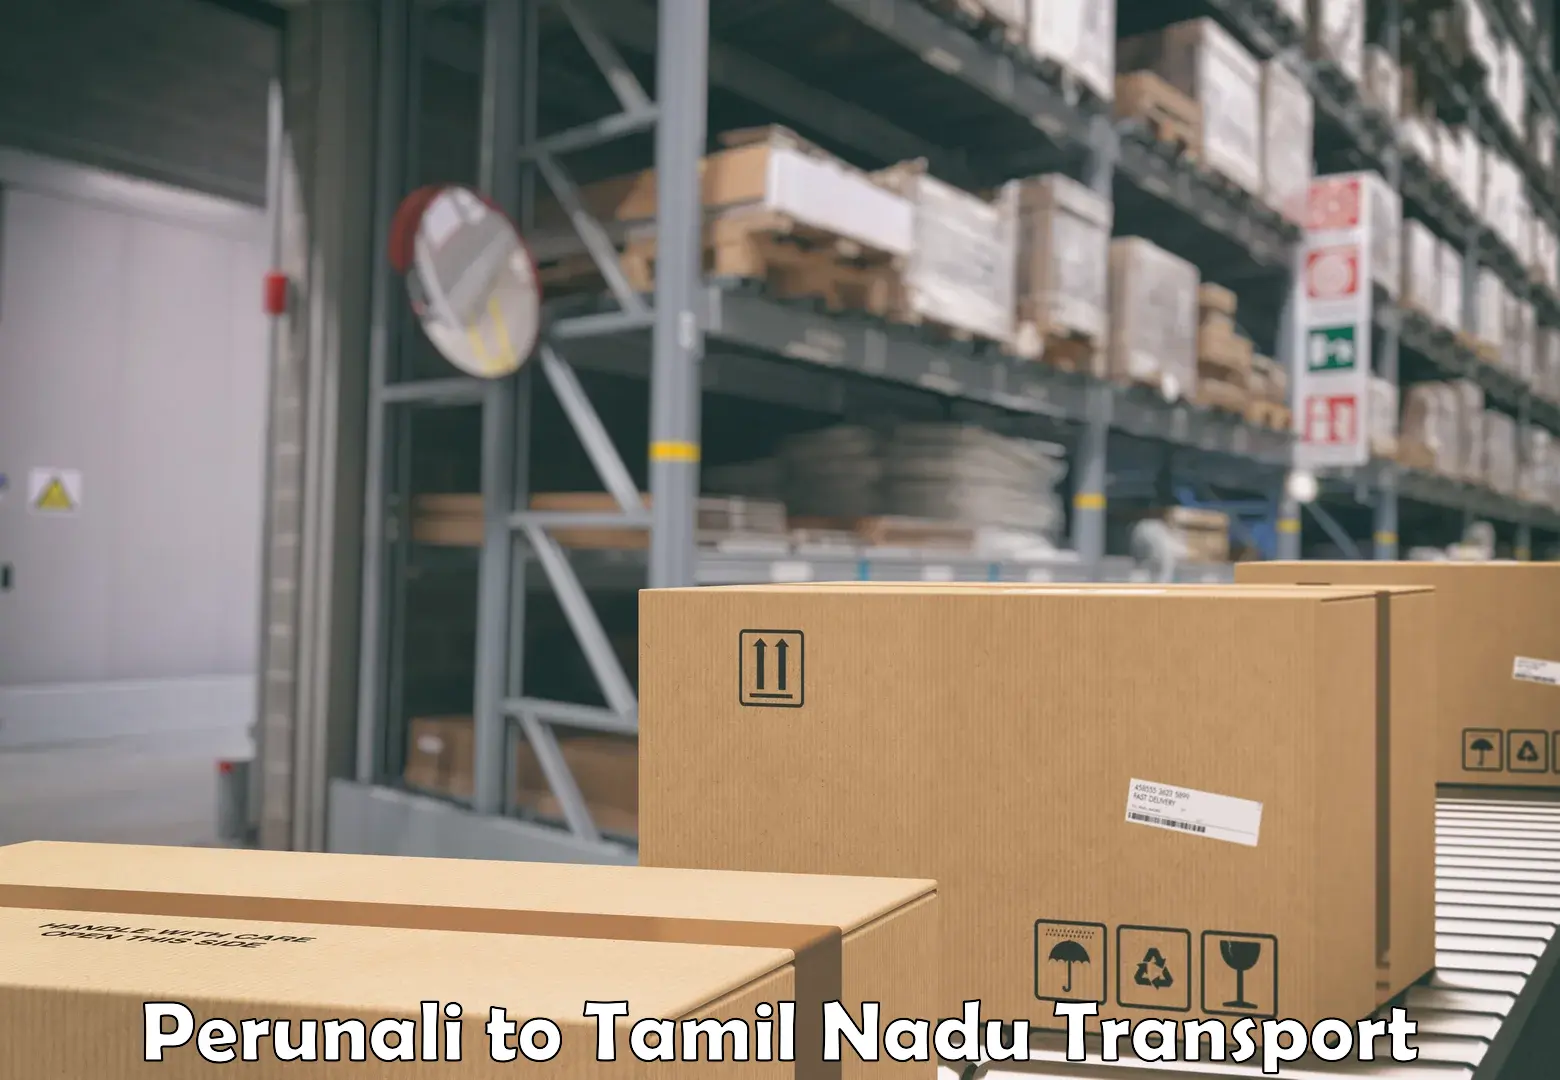 Sending bike to another city Perunali to Tamil Nadu